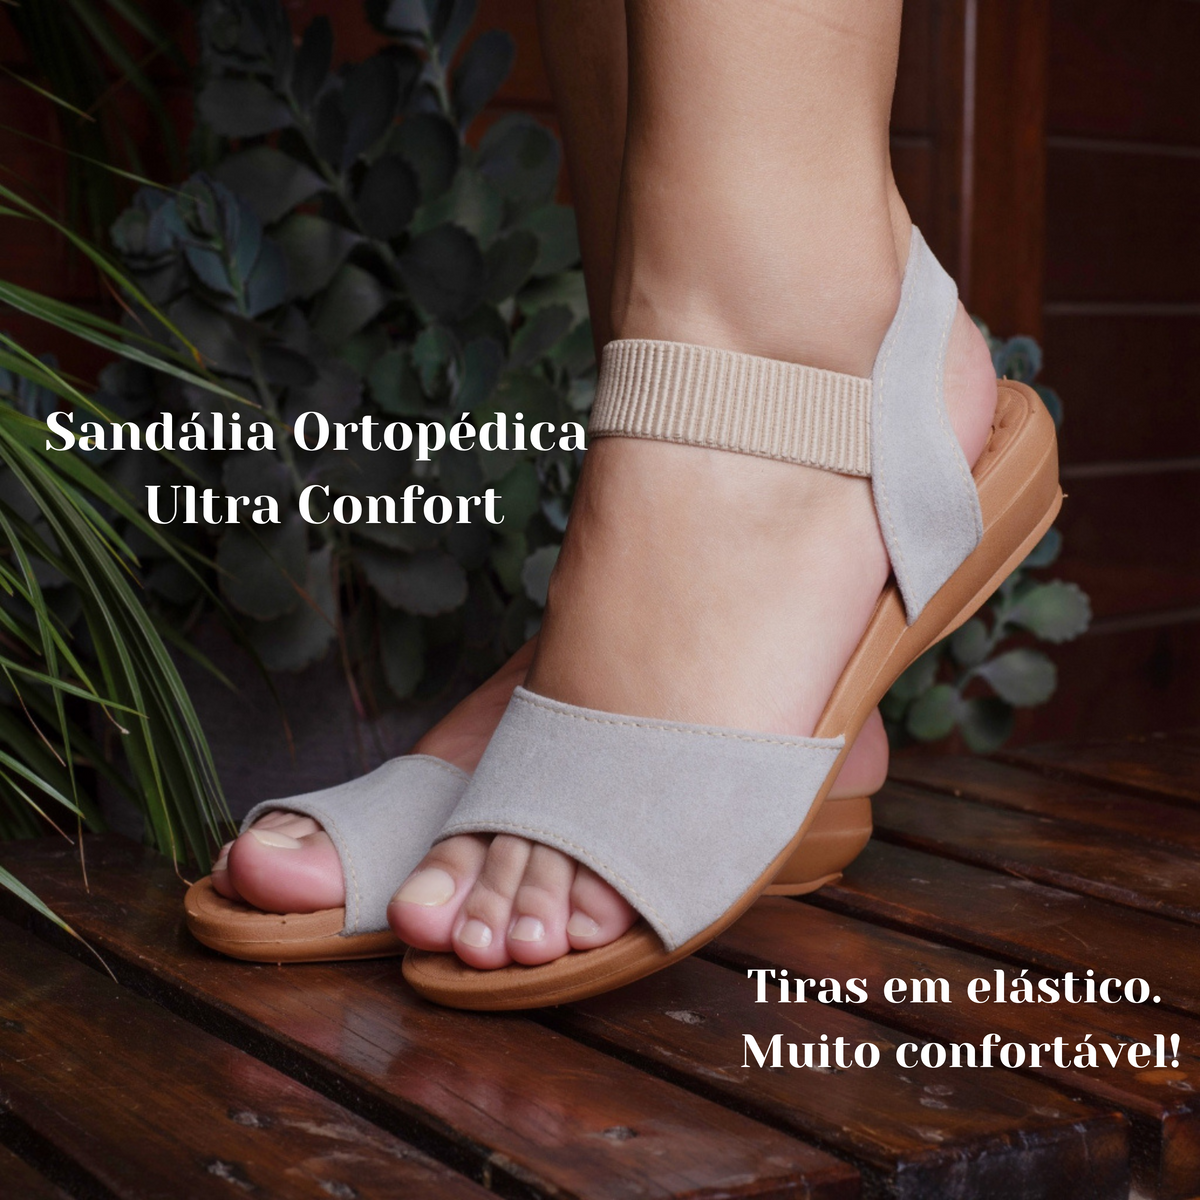 Sandália Ortopédica Ultra Confort de Elástico Leve e Macia